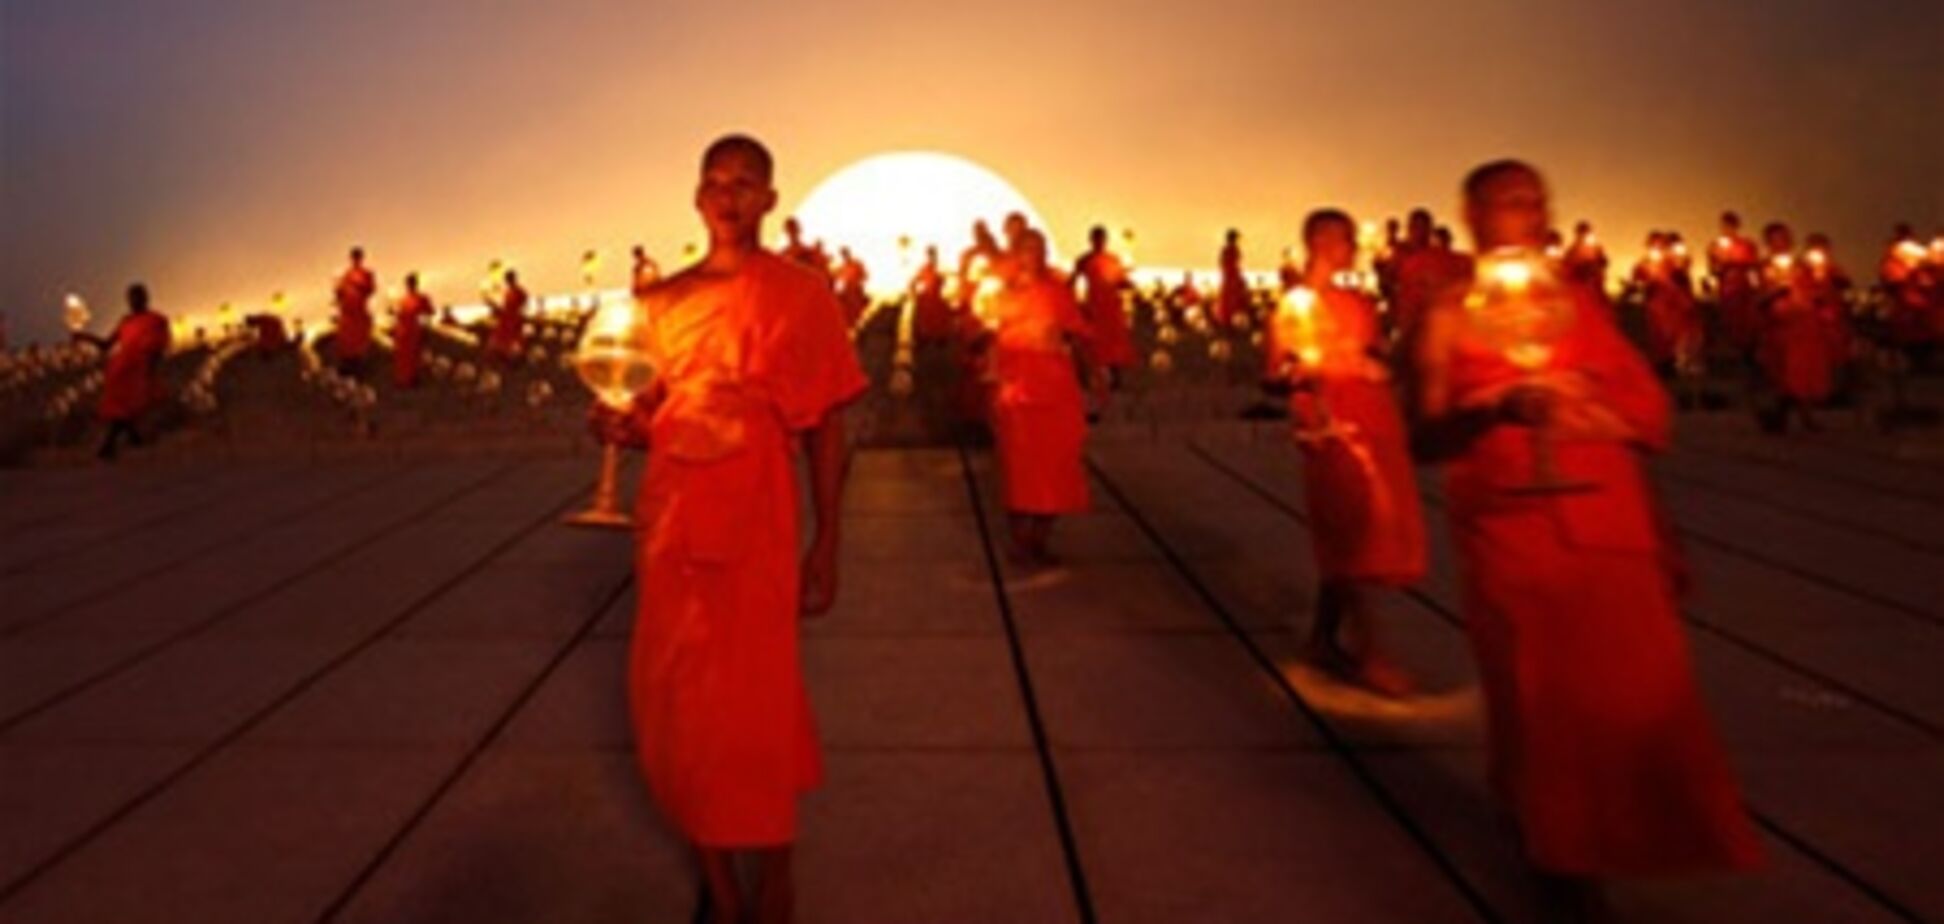 В Таиланде буддийских монахов изгнали из монастырей за наркотики